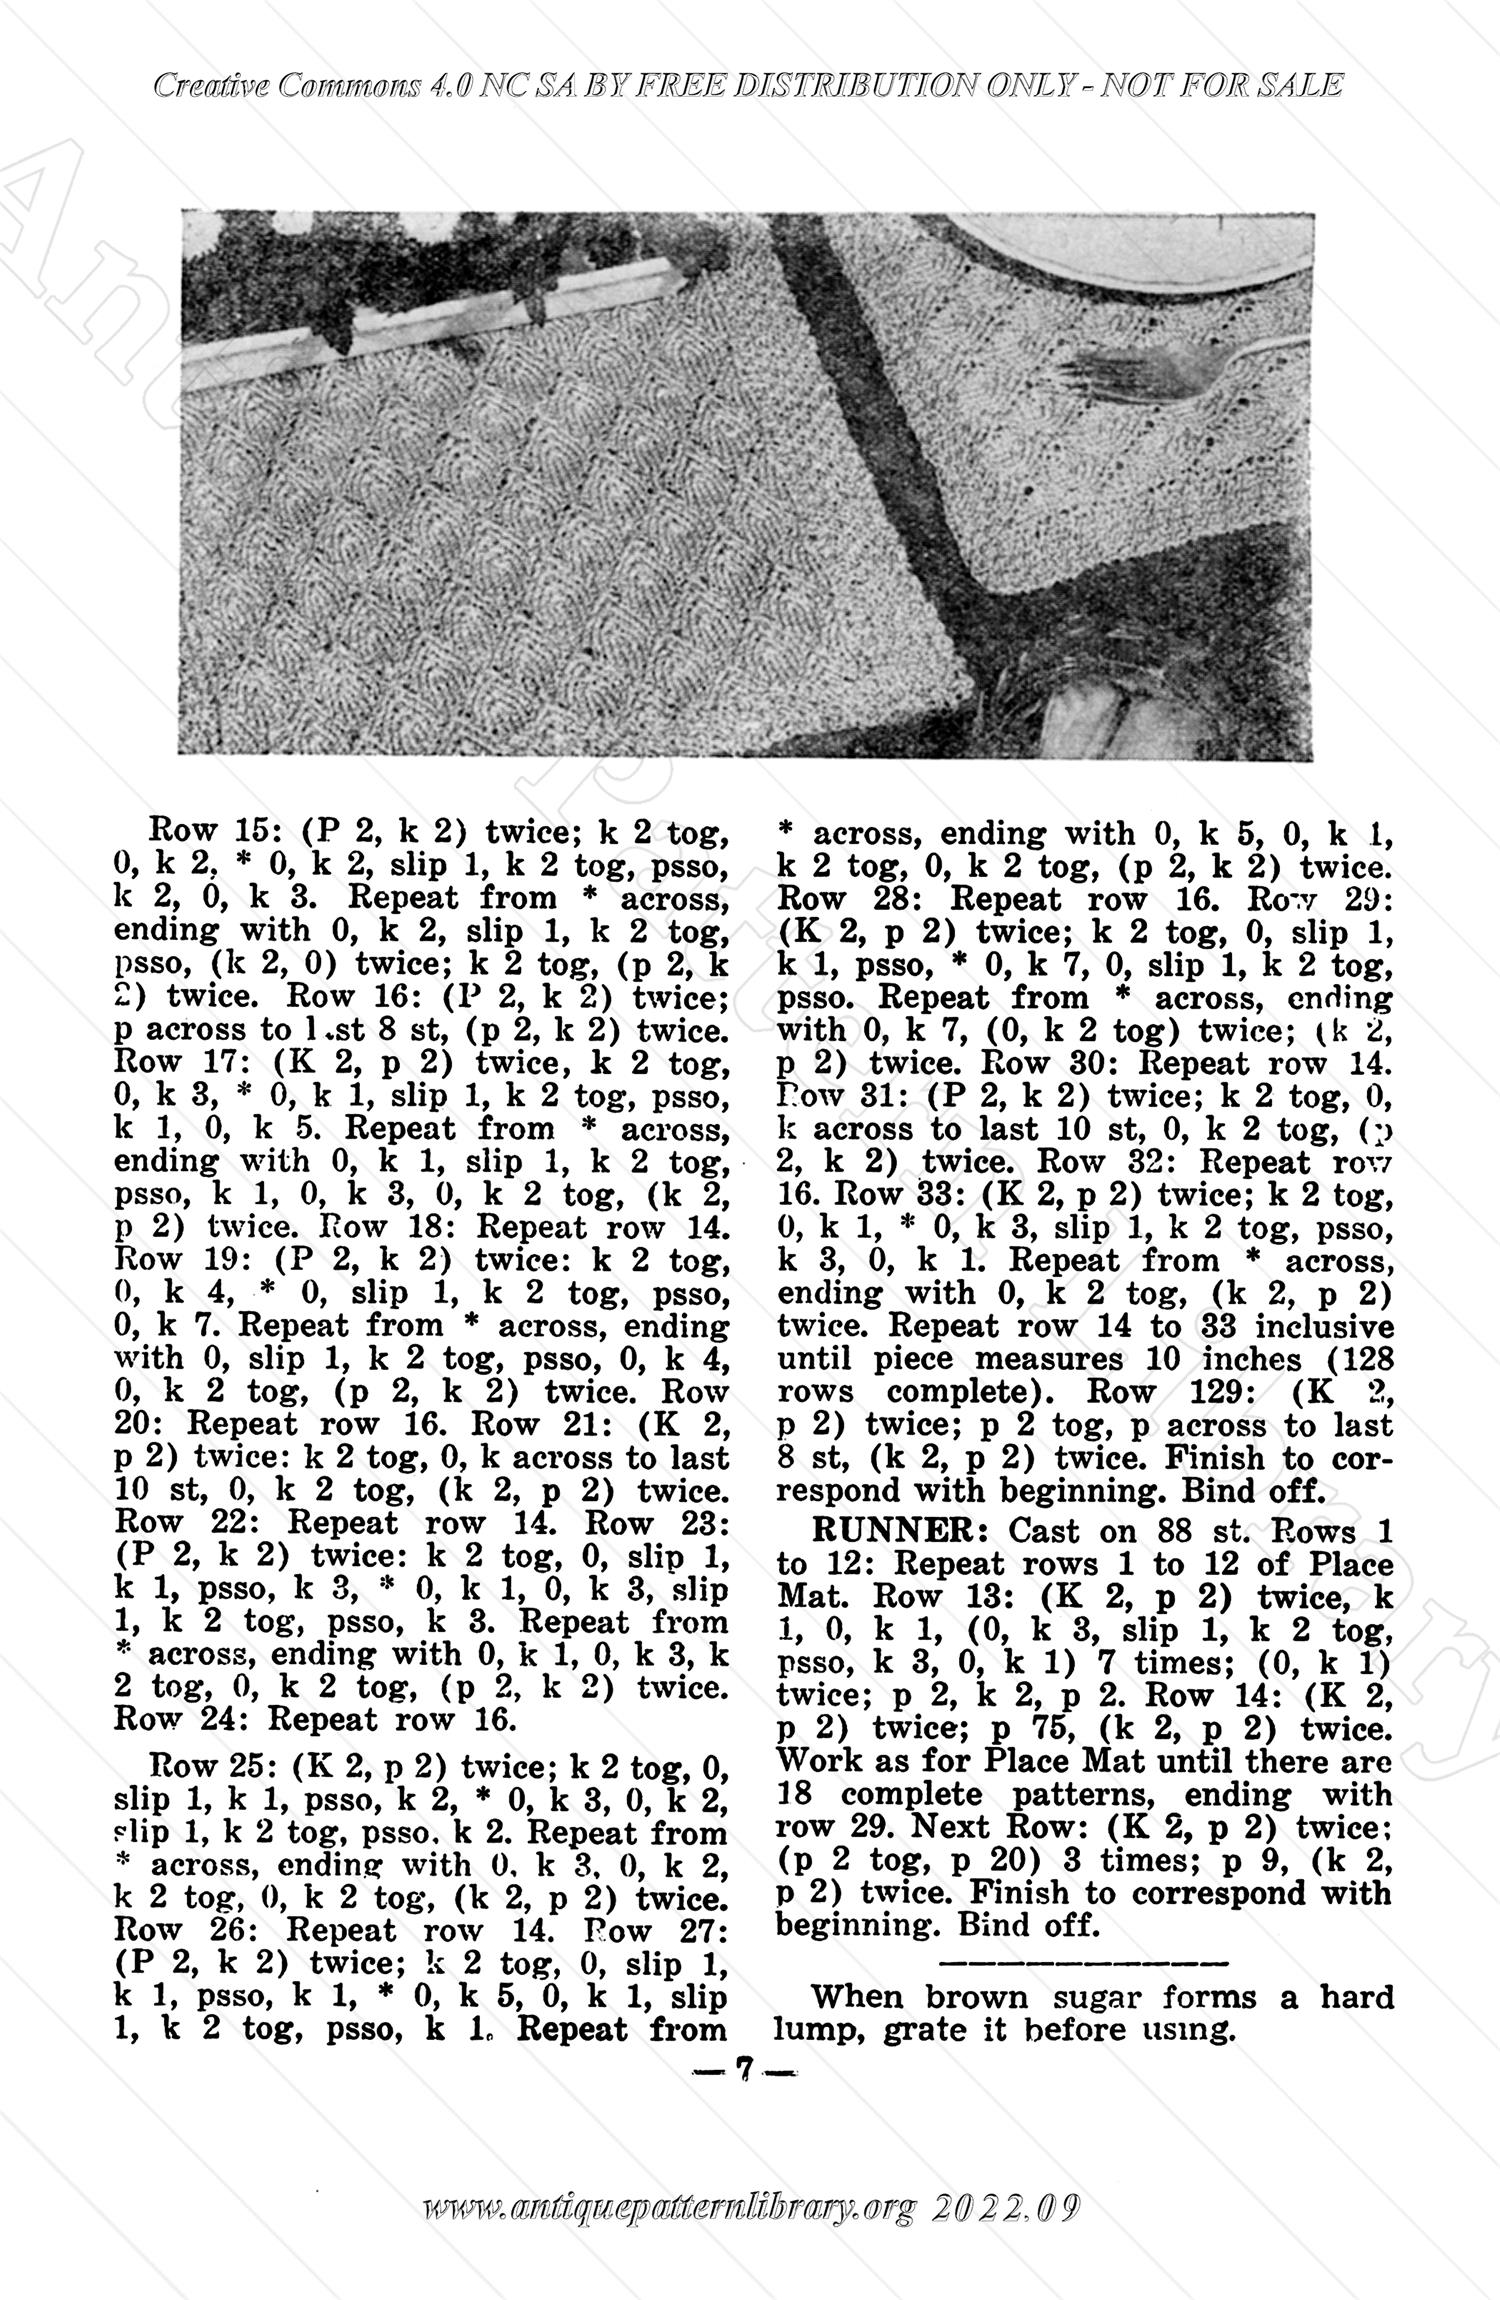 I-WB11B The Workbasket Vol. 11 No. 11 - August 1946